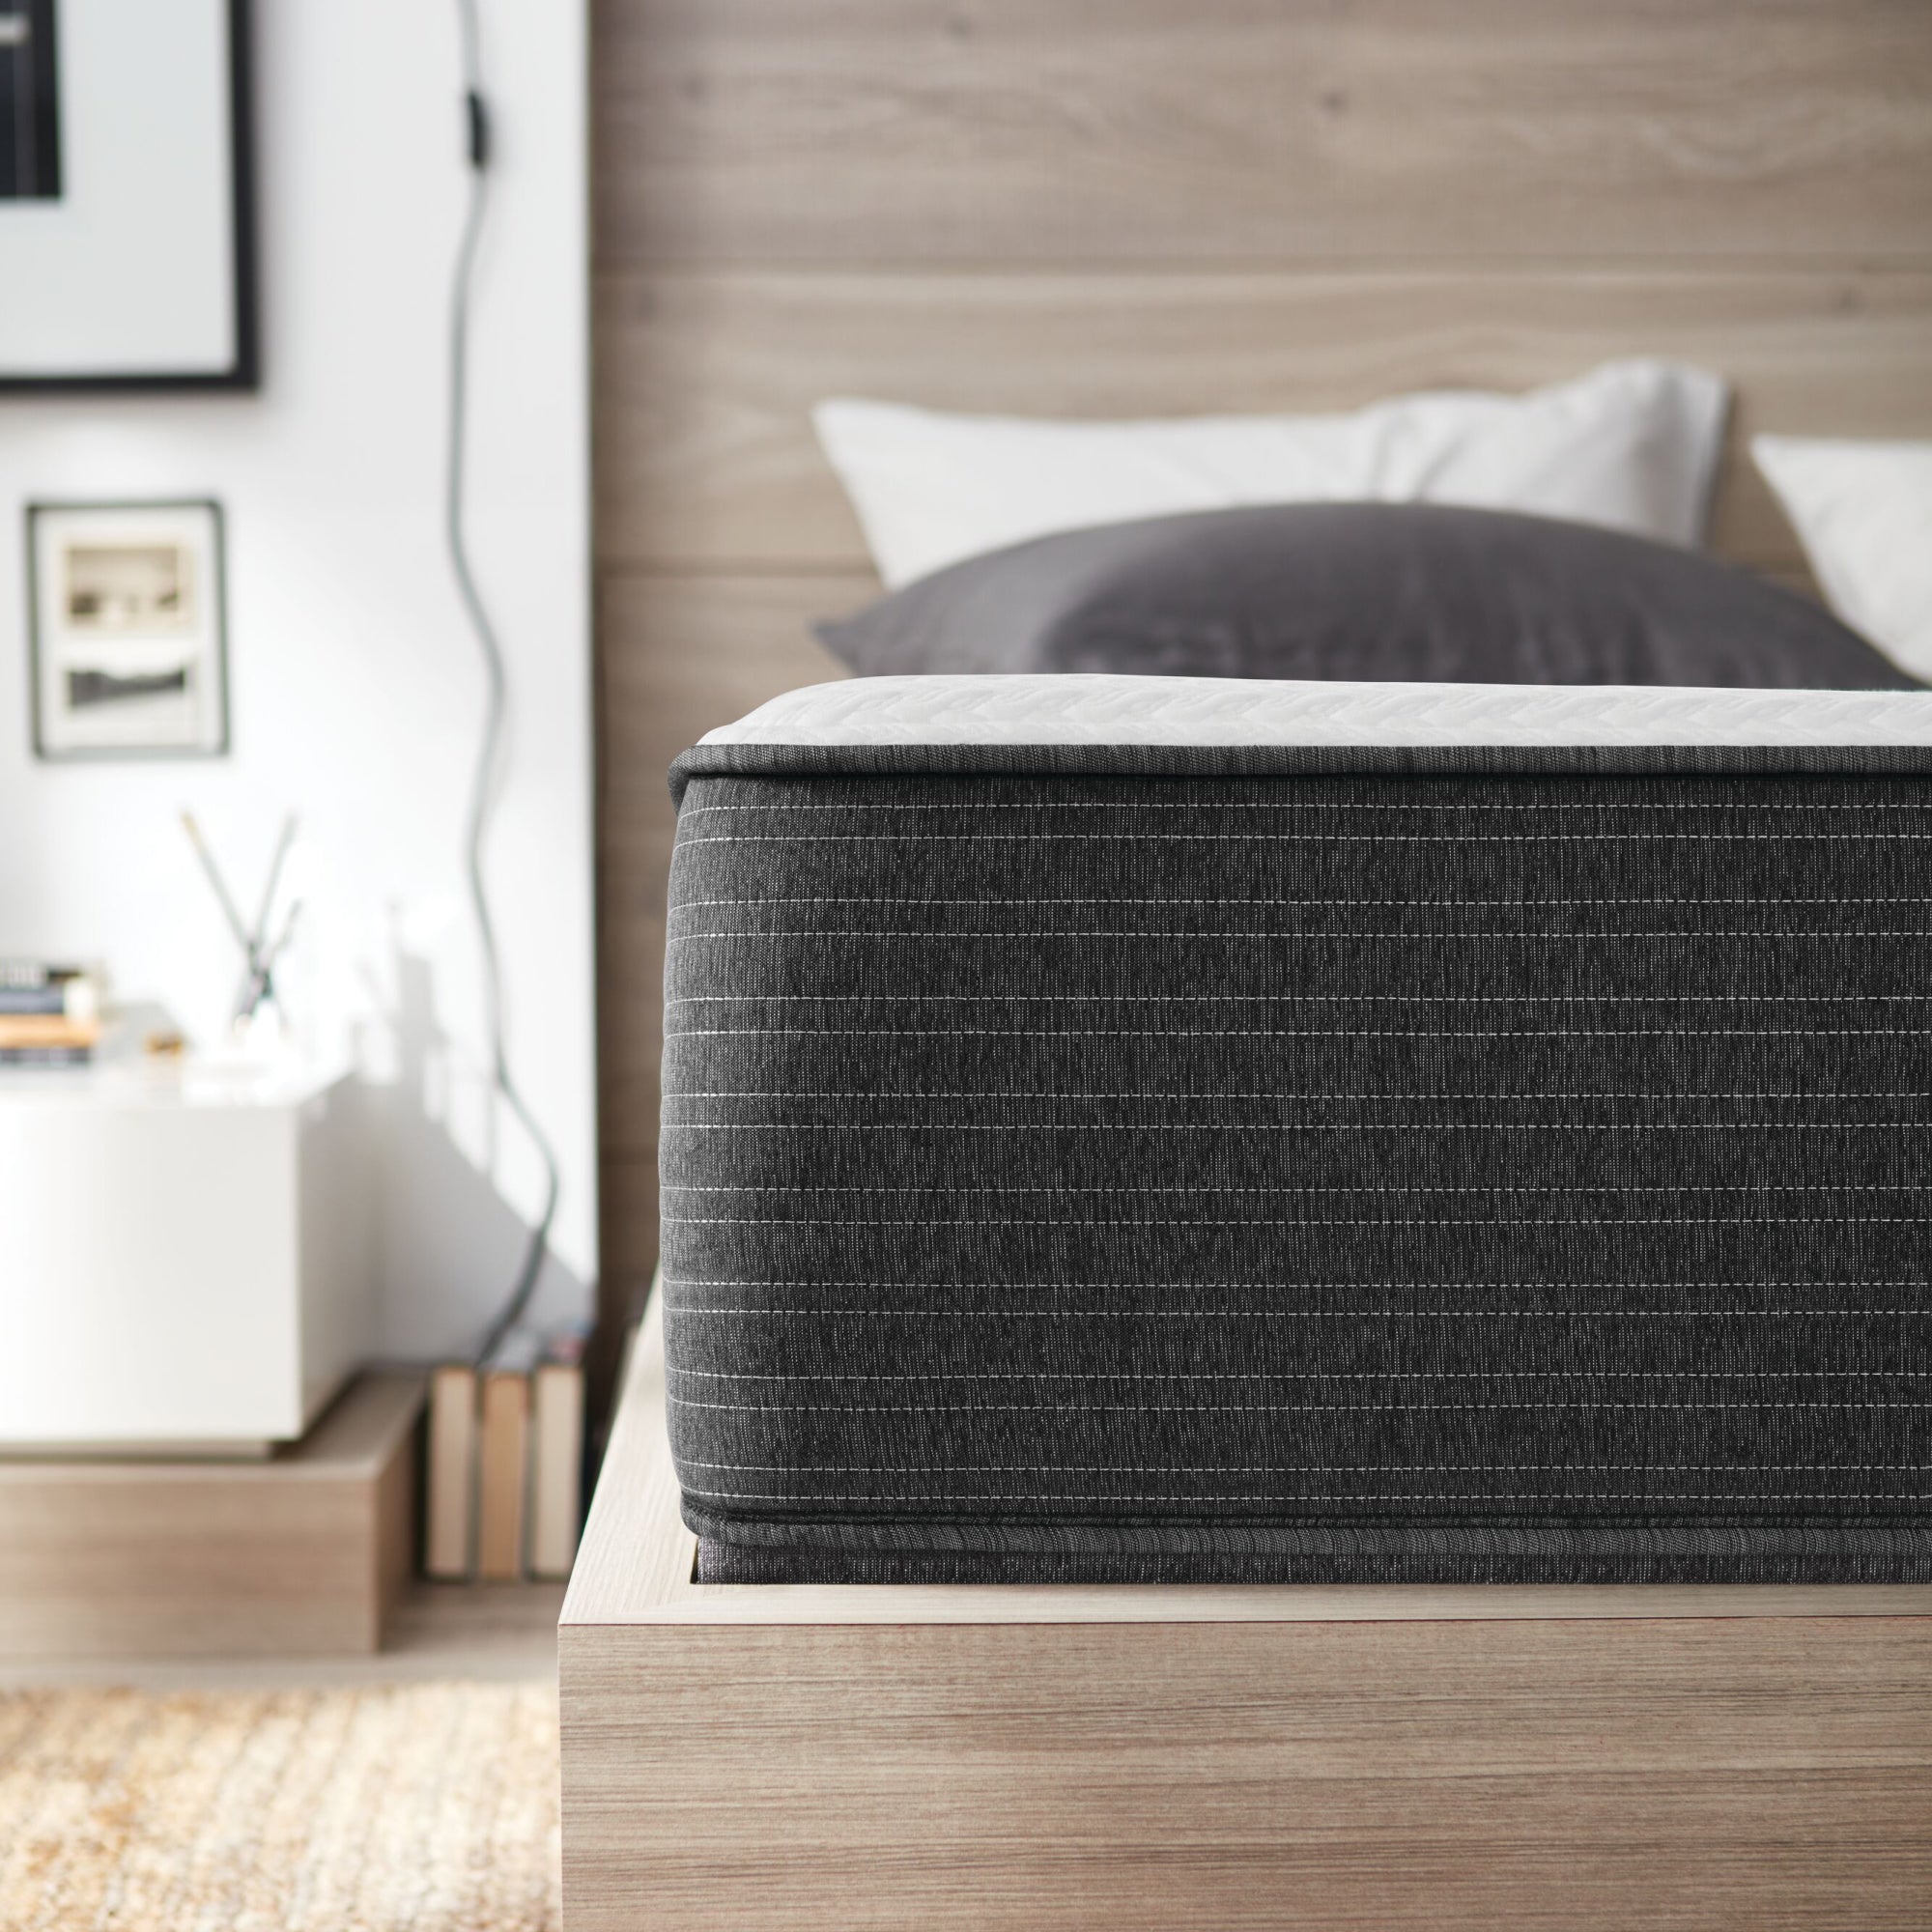 Corner view of the Beautyrest Select hybrid mattress ||feel: plush